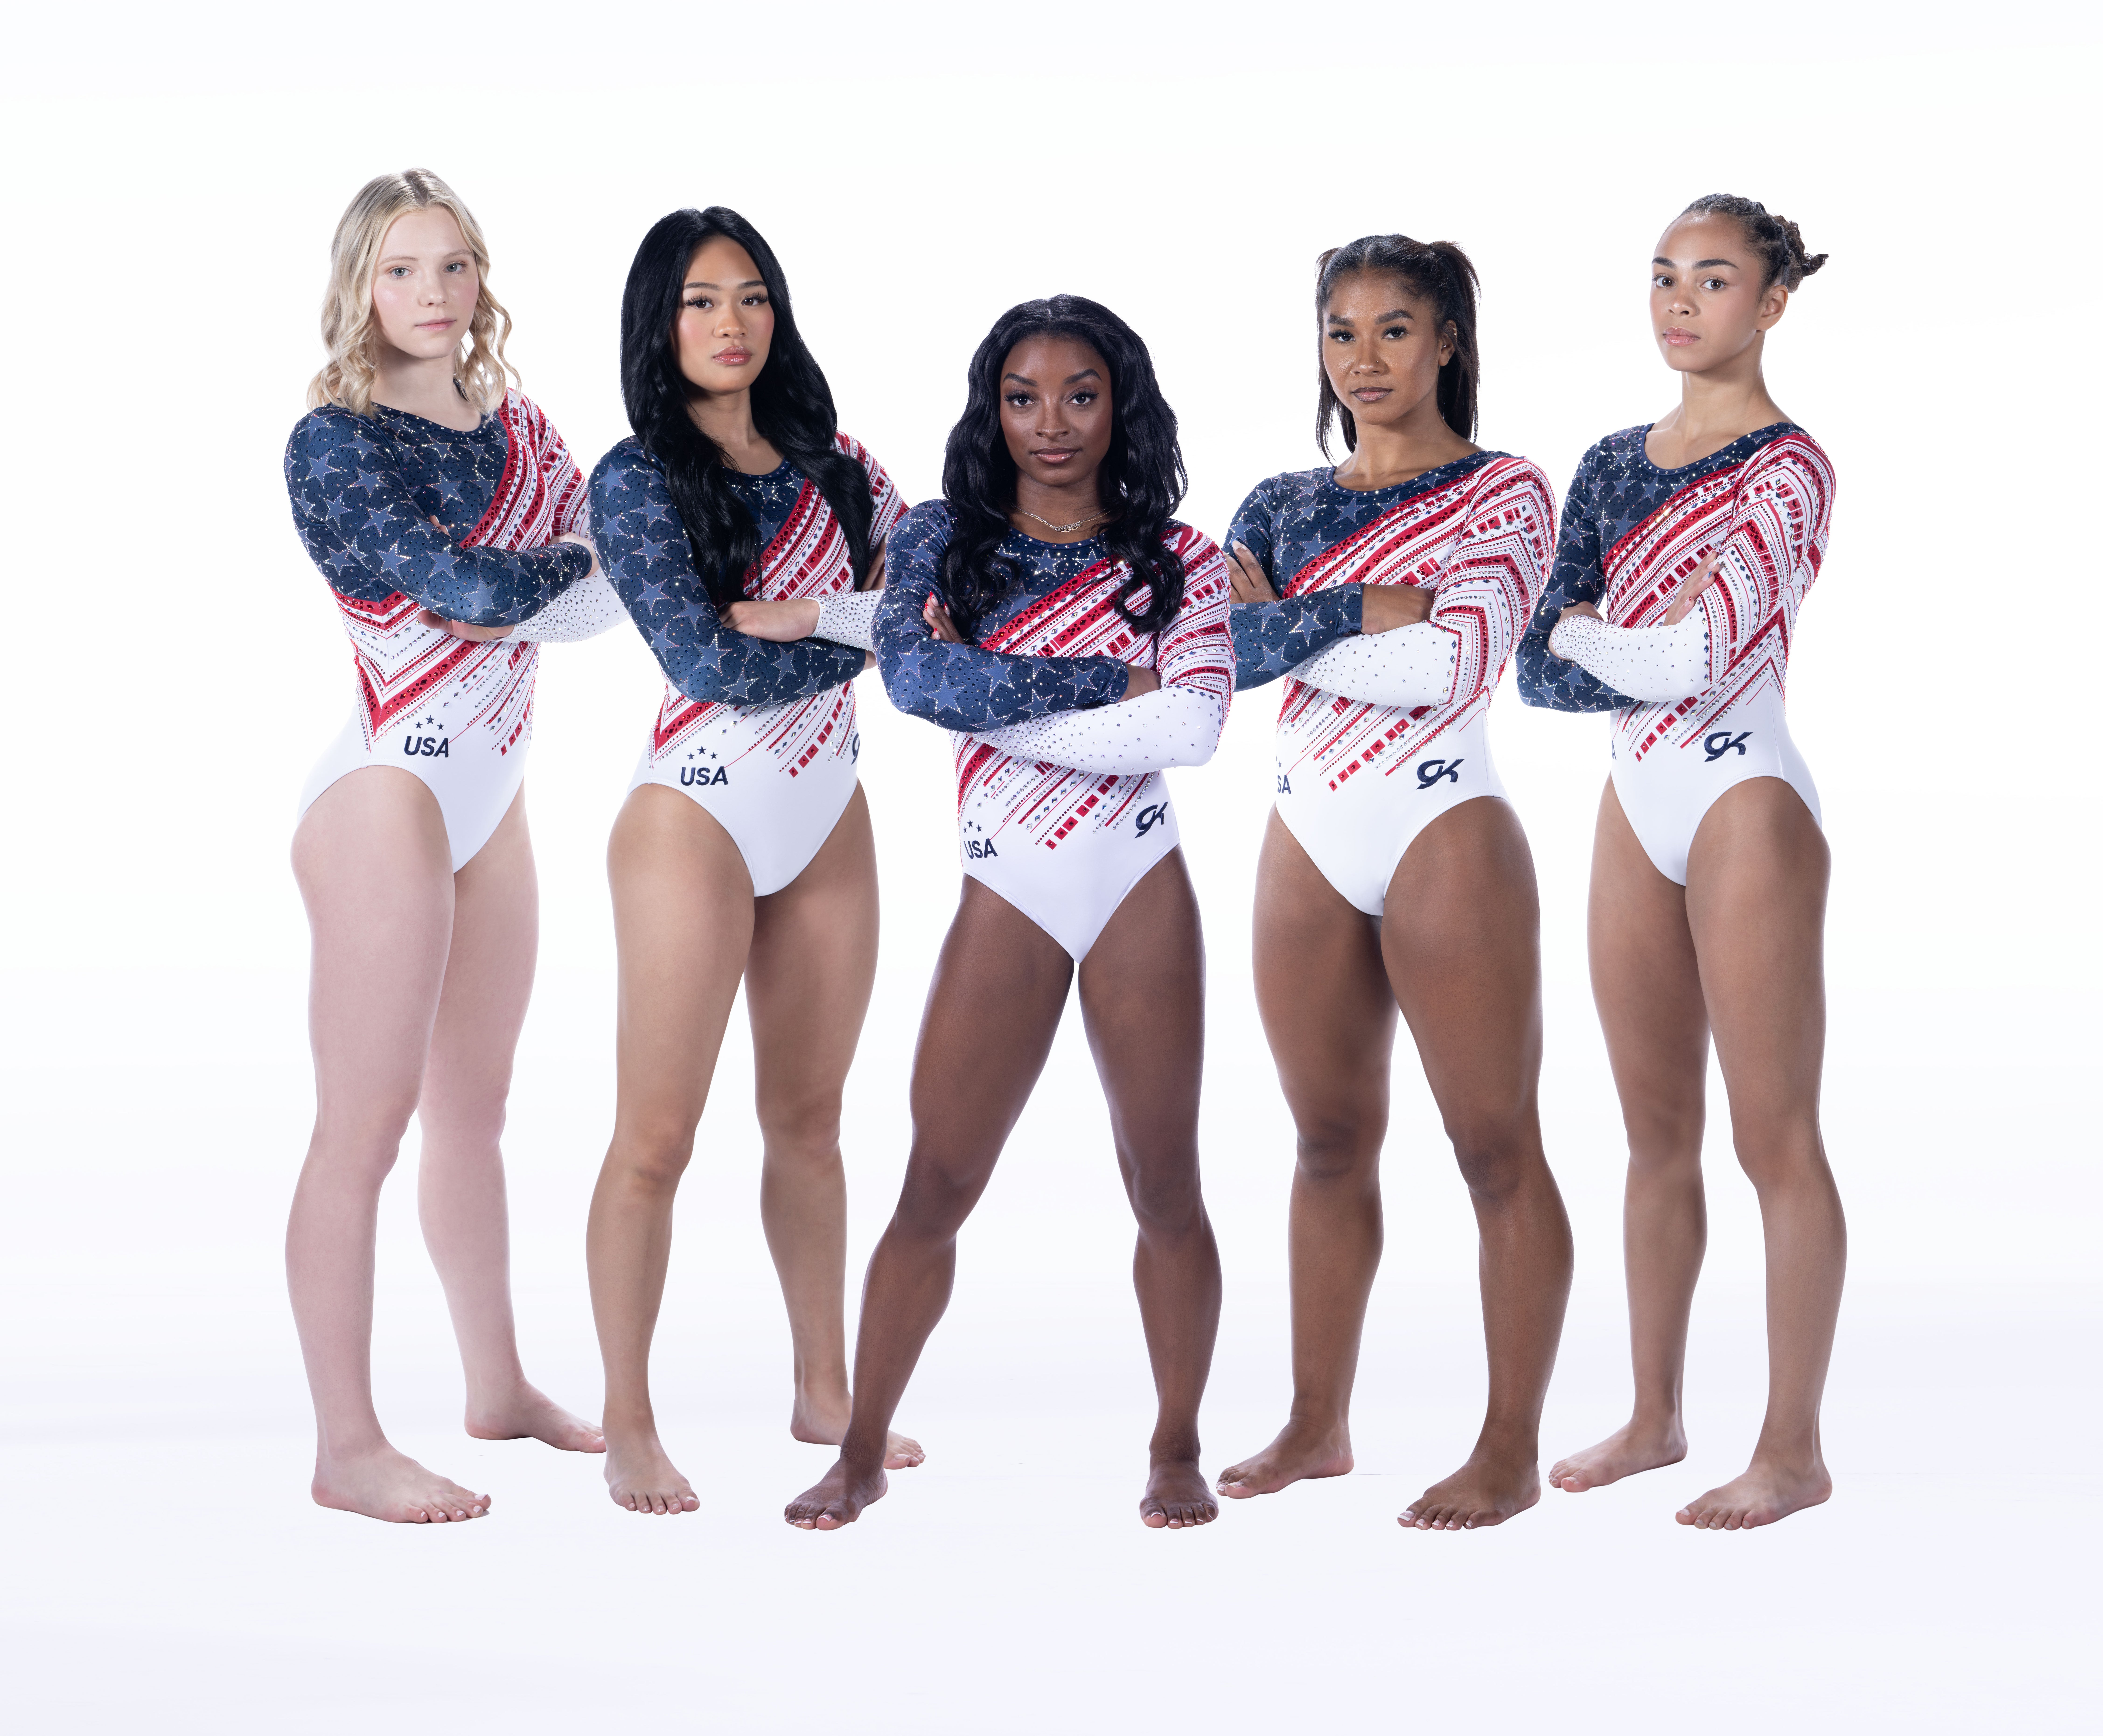 Team USA’s women’s gymnastics uniforms with Swarovski crystals